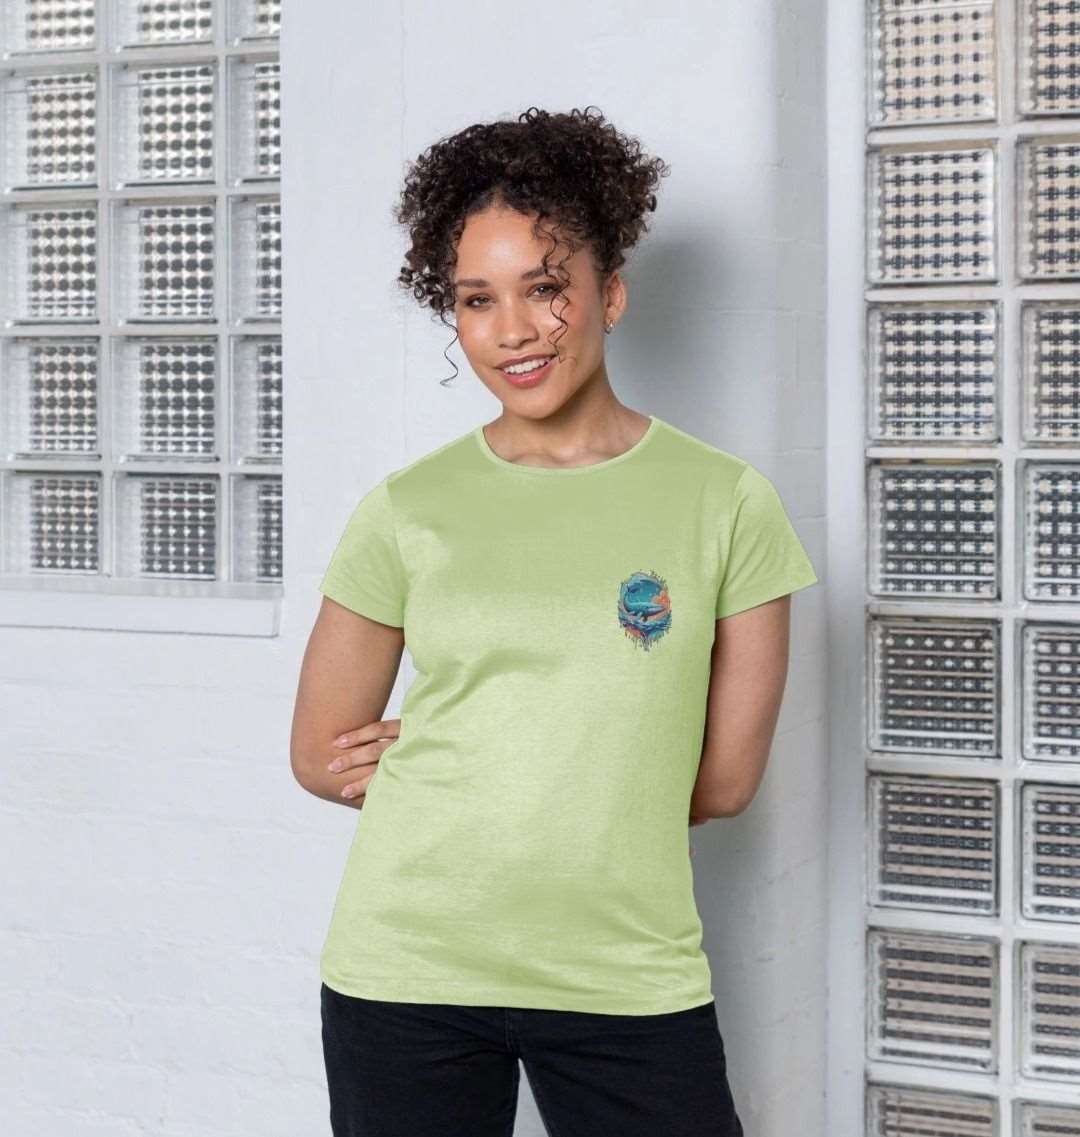 Women's blue whale design crew neck organic cotton t-shirt - Premium Eco Chic Printed T-shirt from Eco Threadz - Just £20! Shop now at Eco Threadz